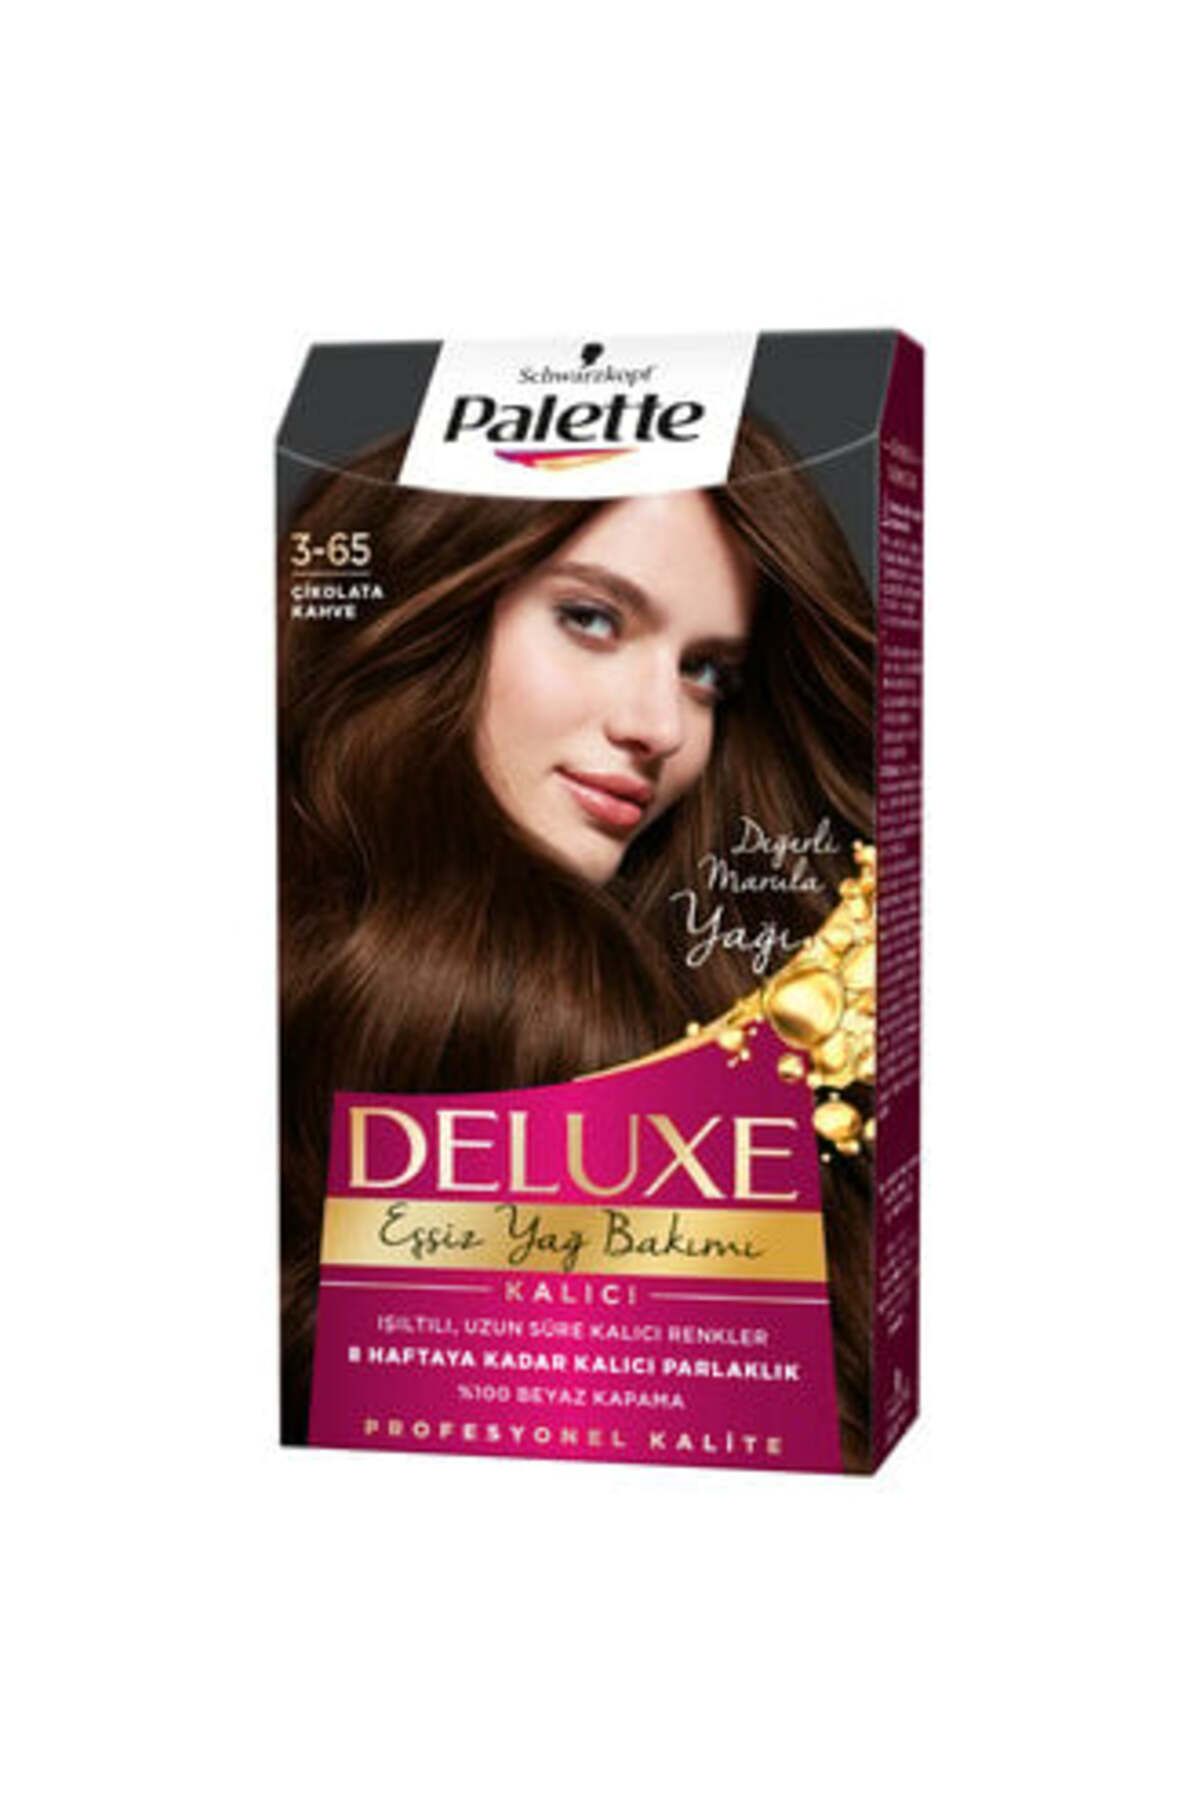 Palette Deluxe Saç Boyası Çikolata Kahve 3-65 ( 1 ADET )